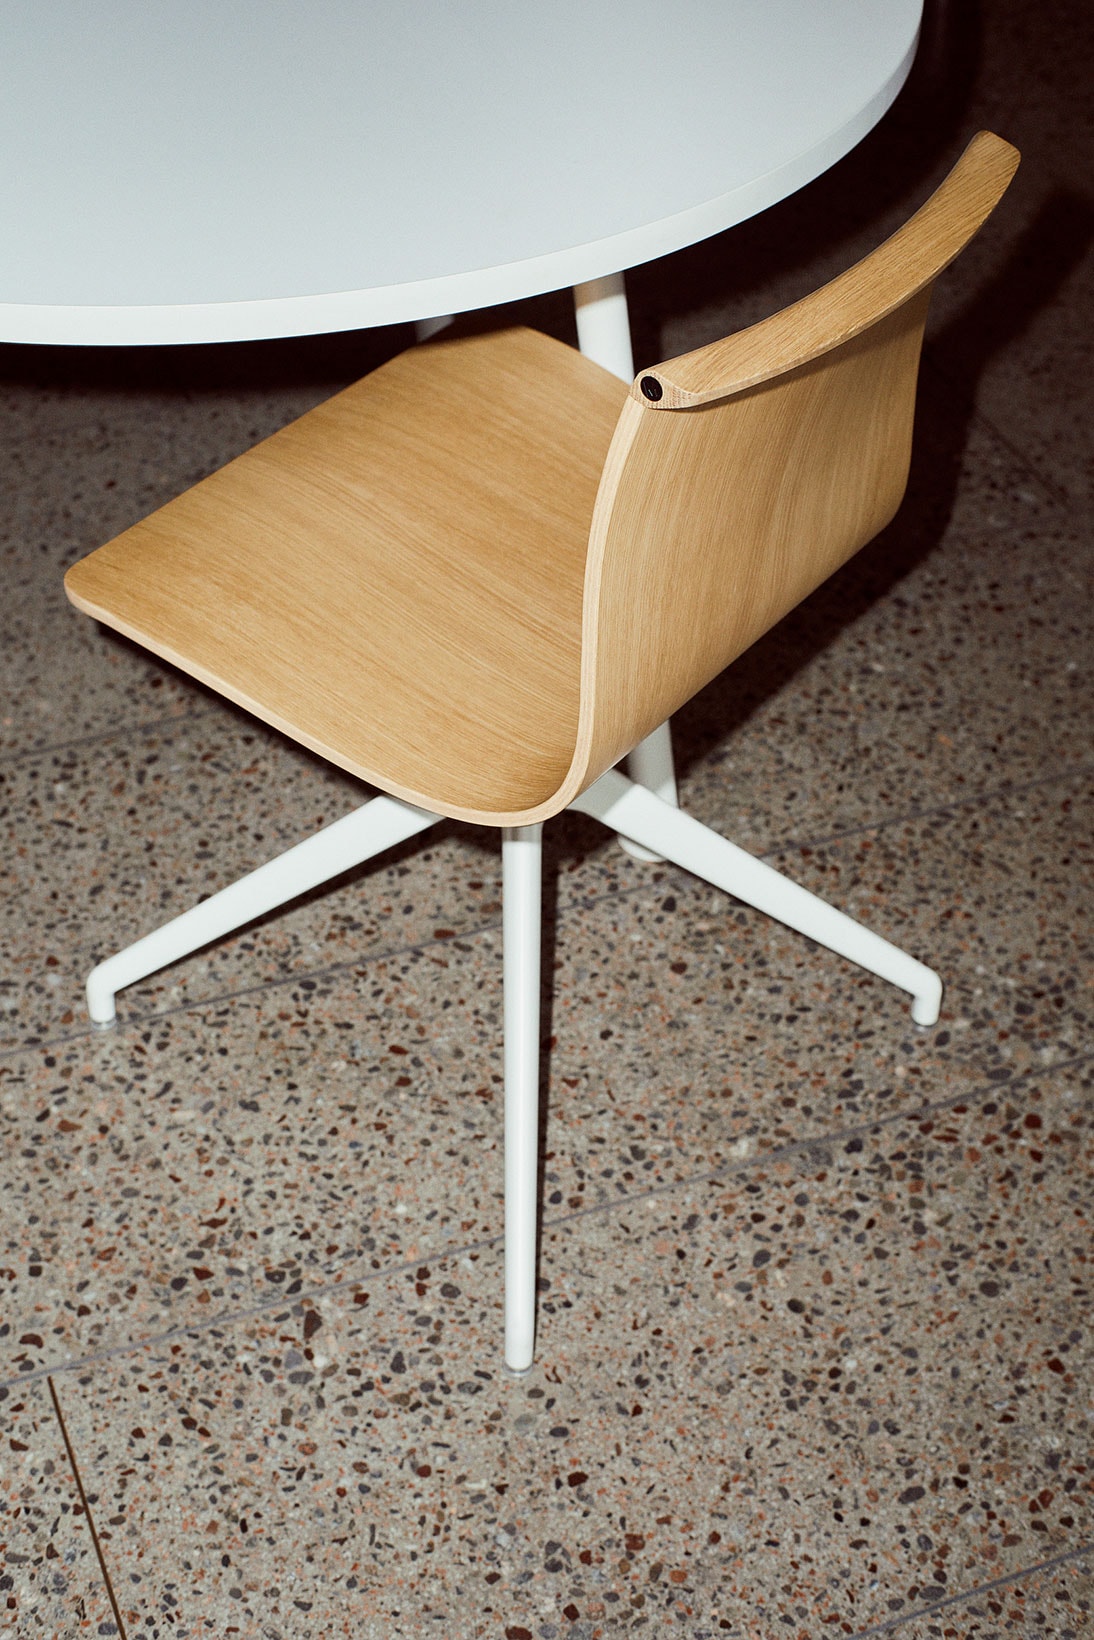 massproductions home design chairs serif shell oak wood white legs desk